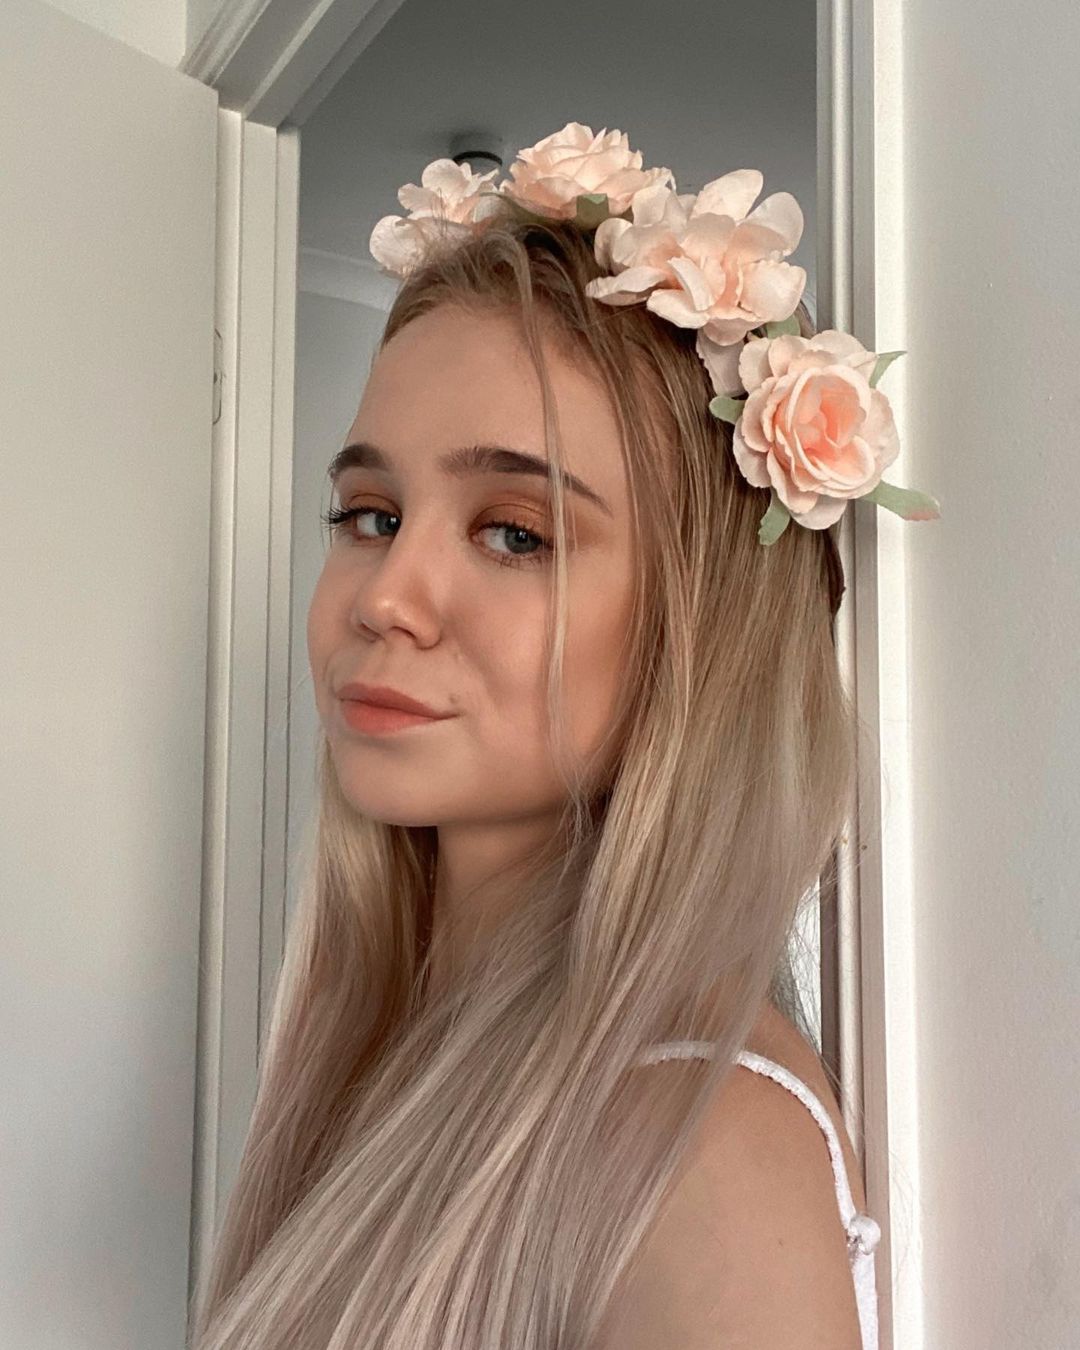 Alisa Goldfinch seen in Flower Hair Band During Instagram Selfie Photos 11/05/2021 4